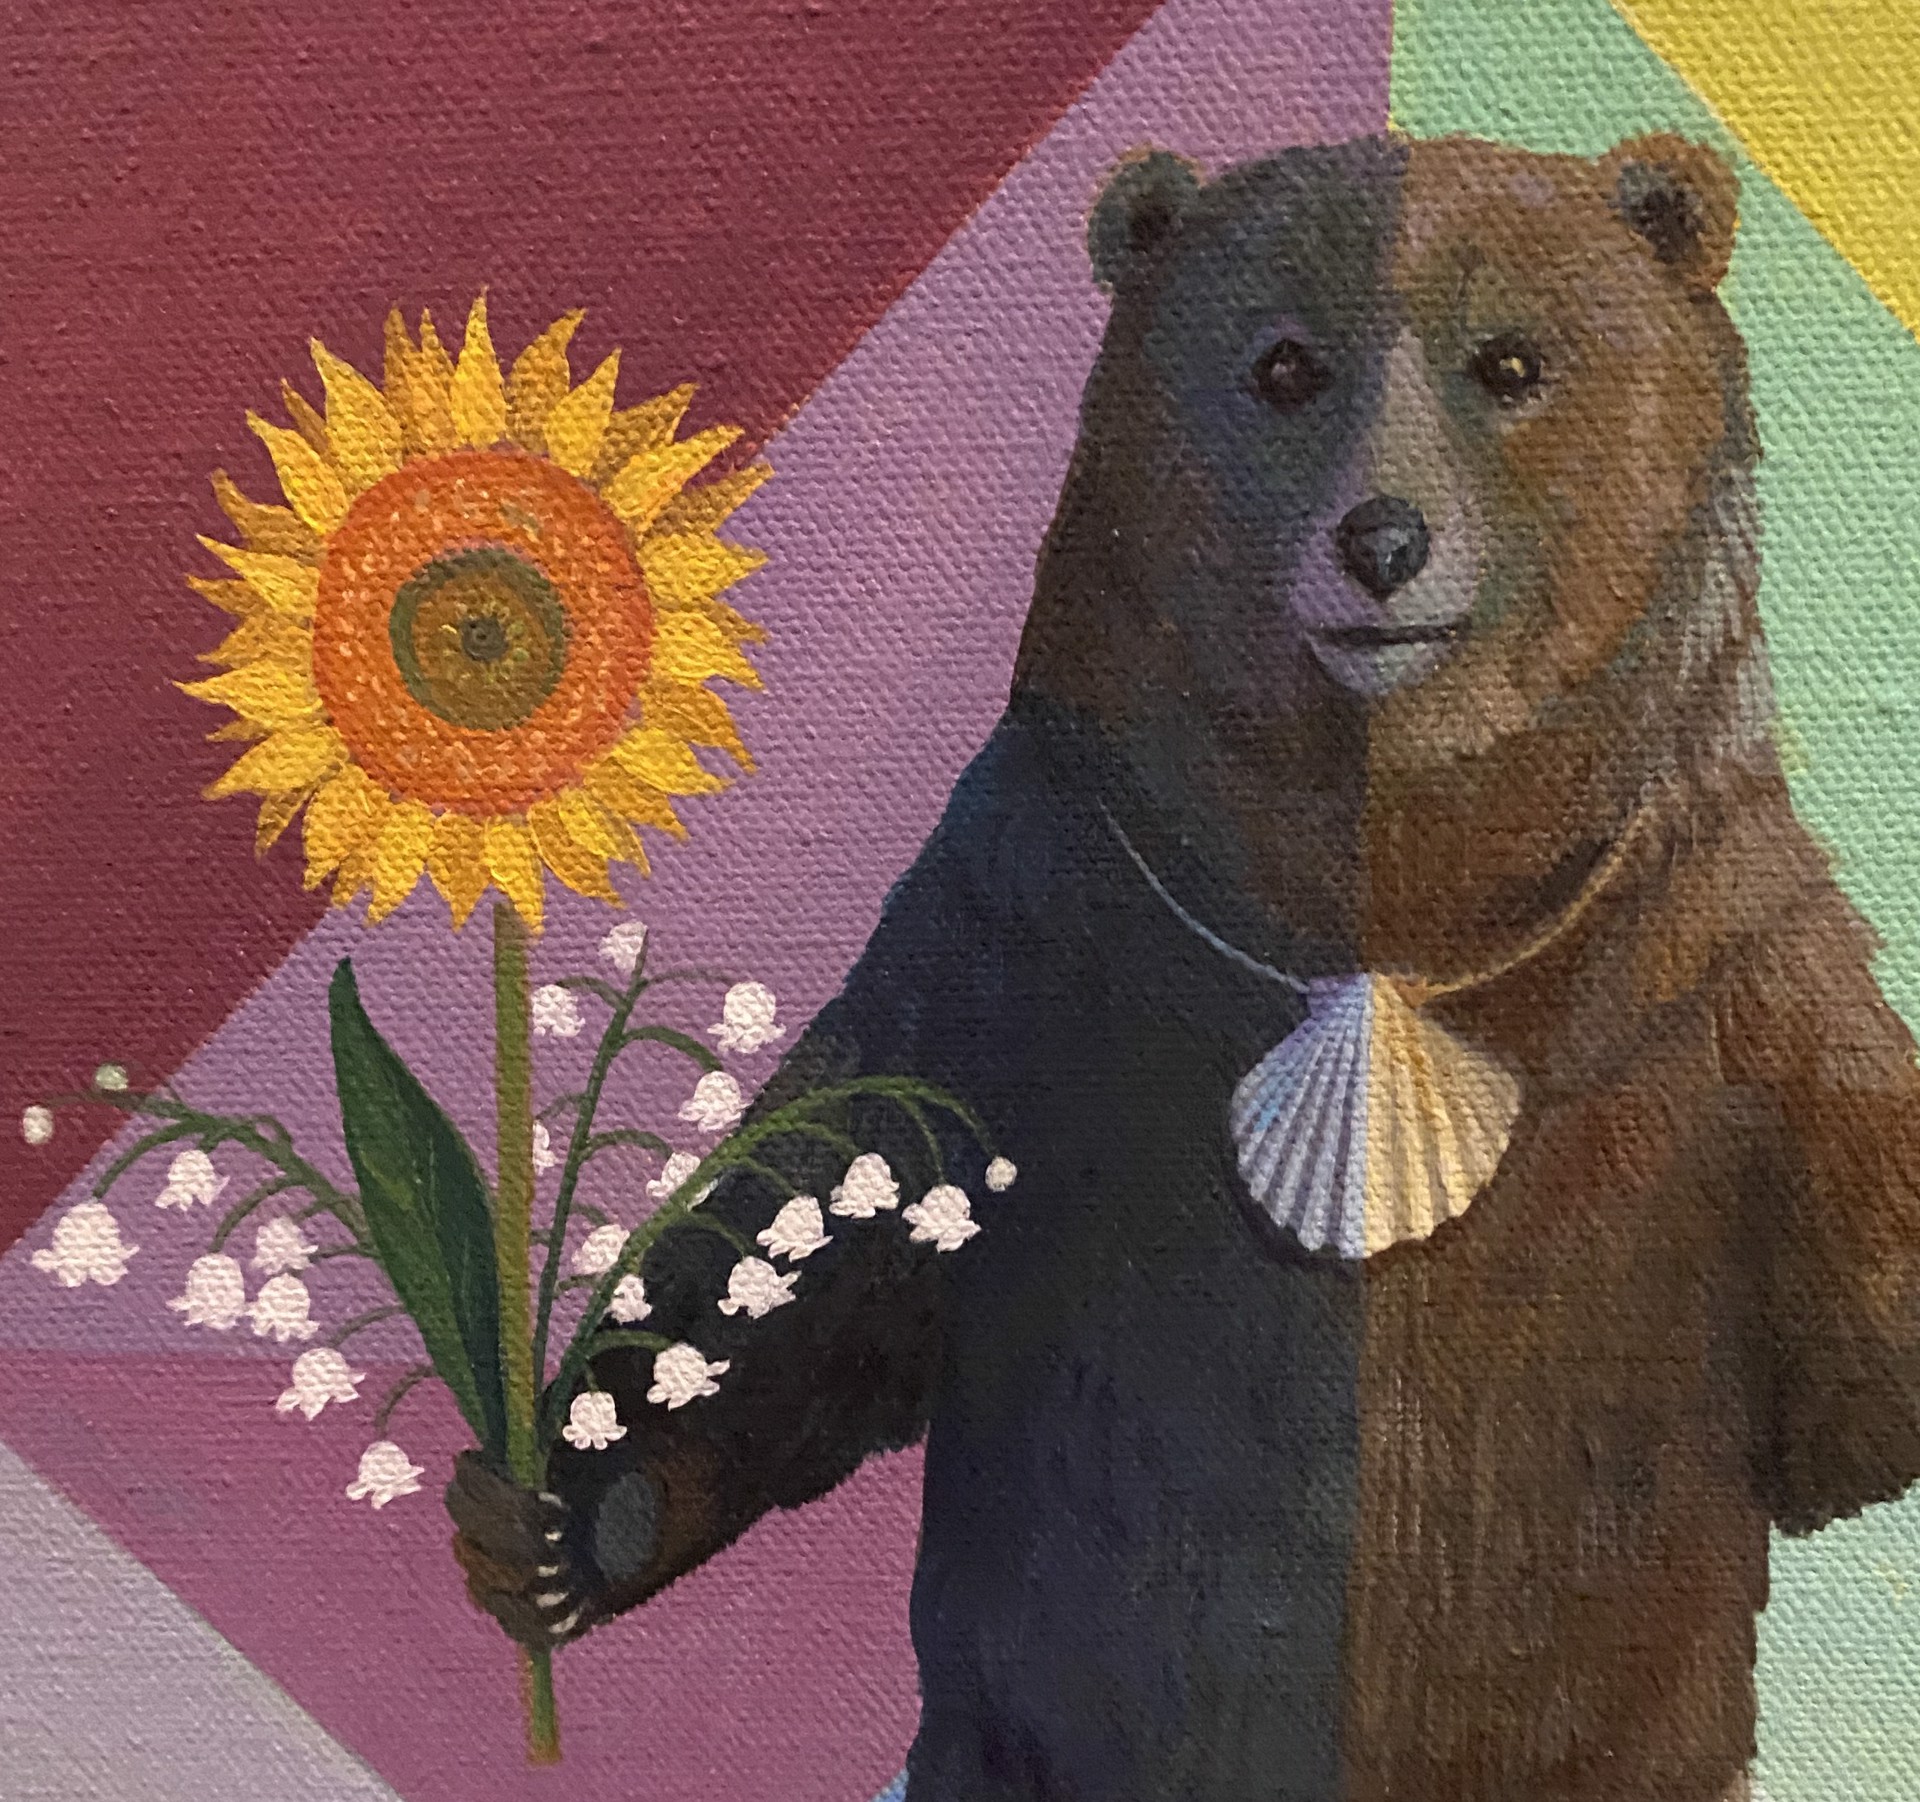 Bear Dream by Lisa Shimko